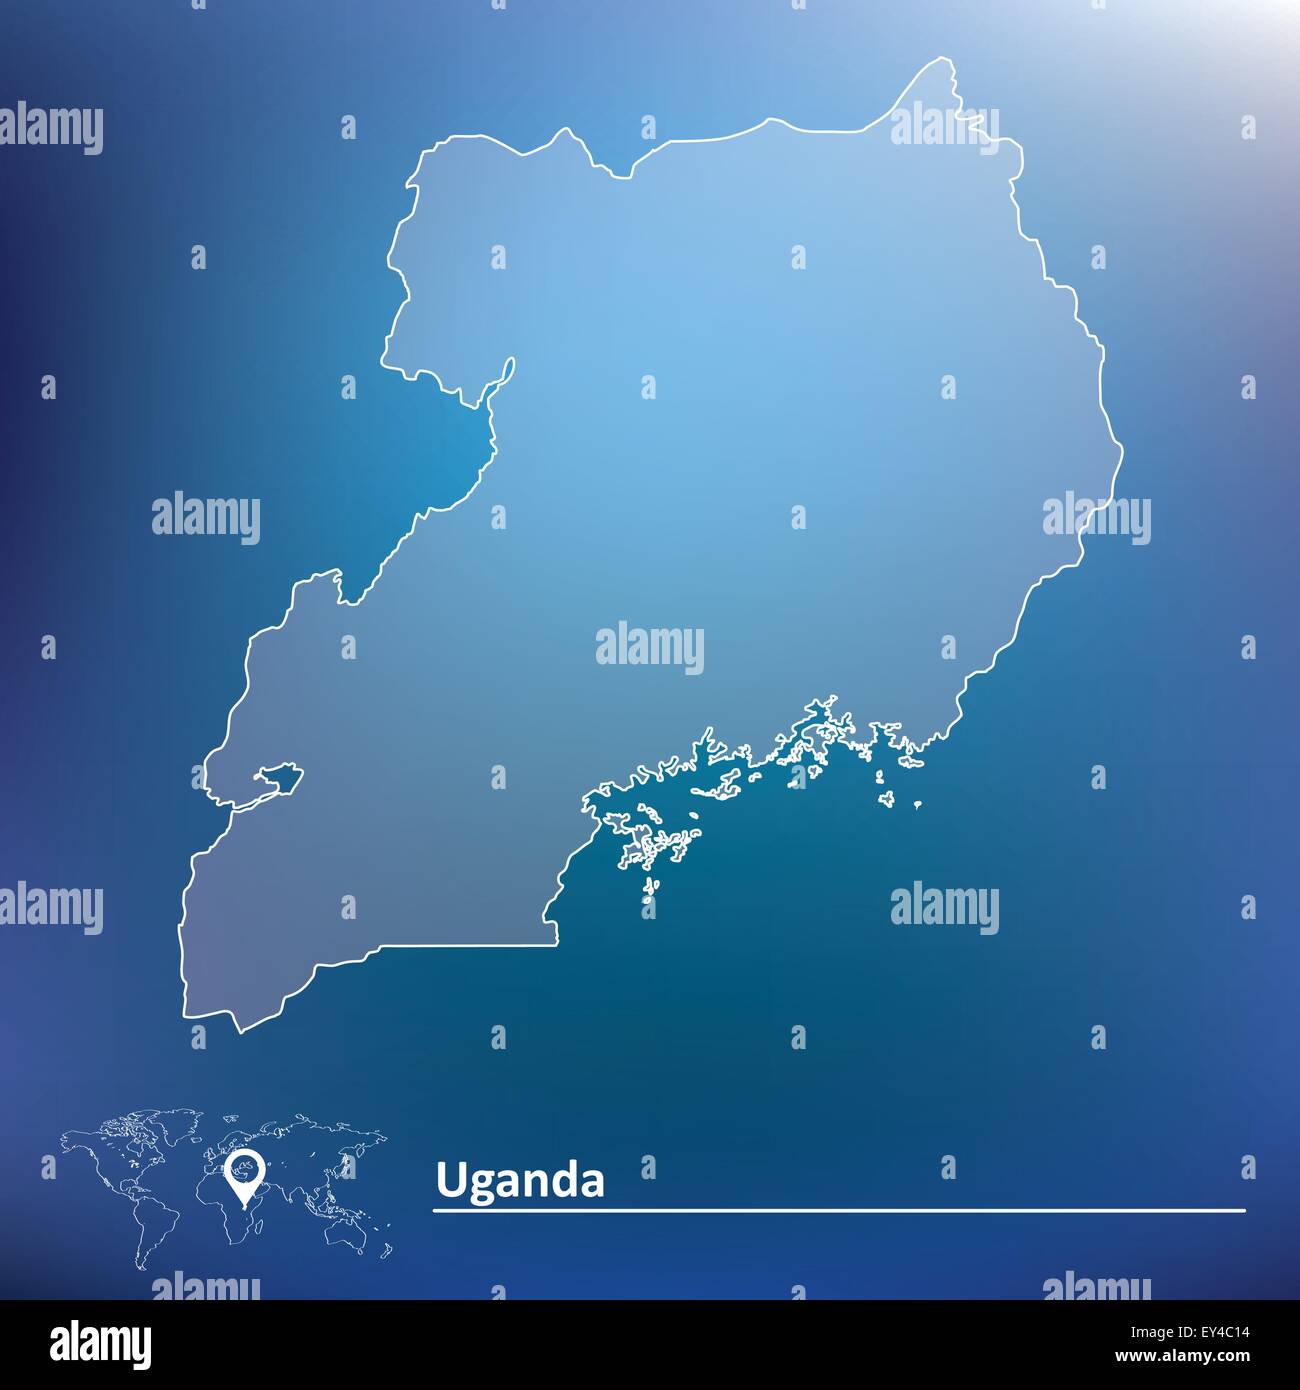 Map of Uganda - vector illustration Stock Vector